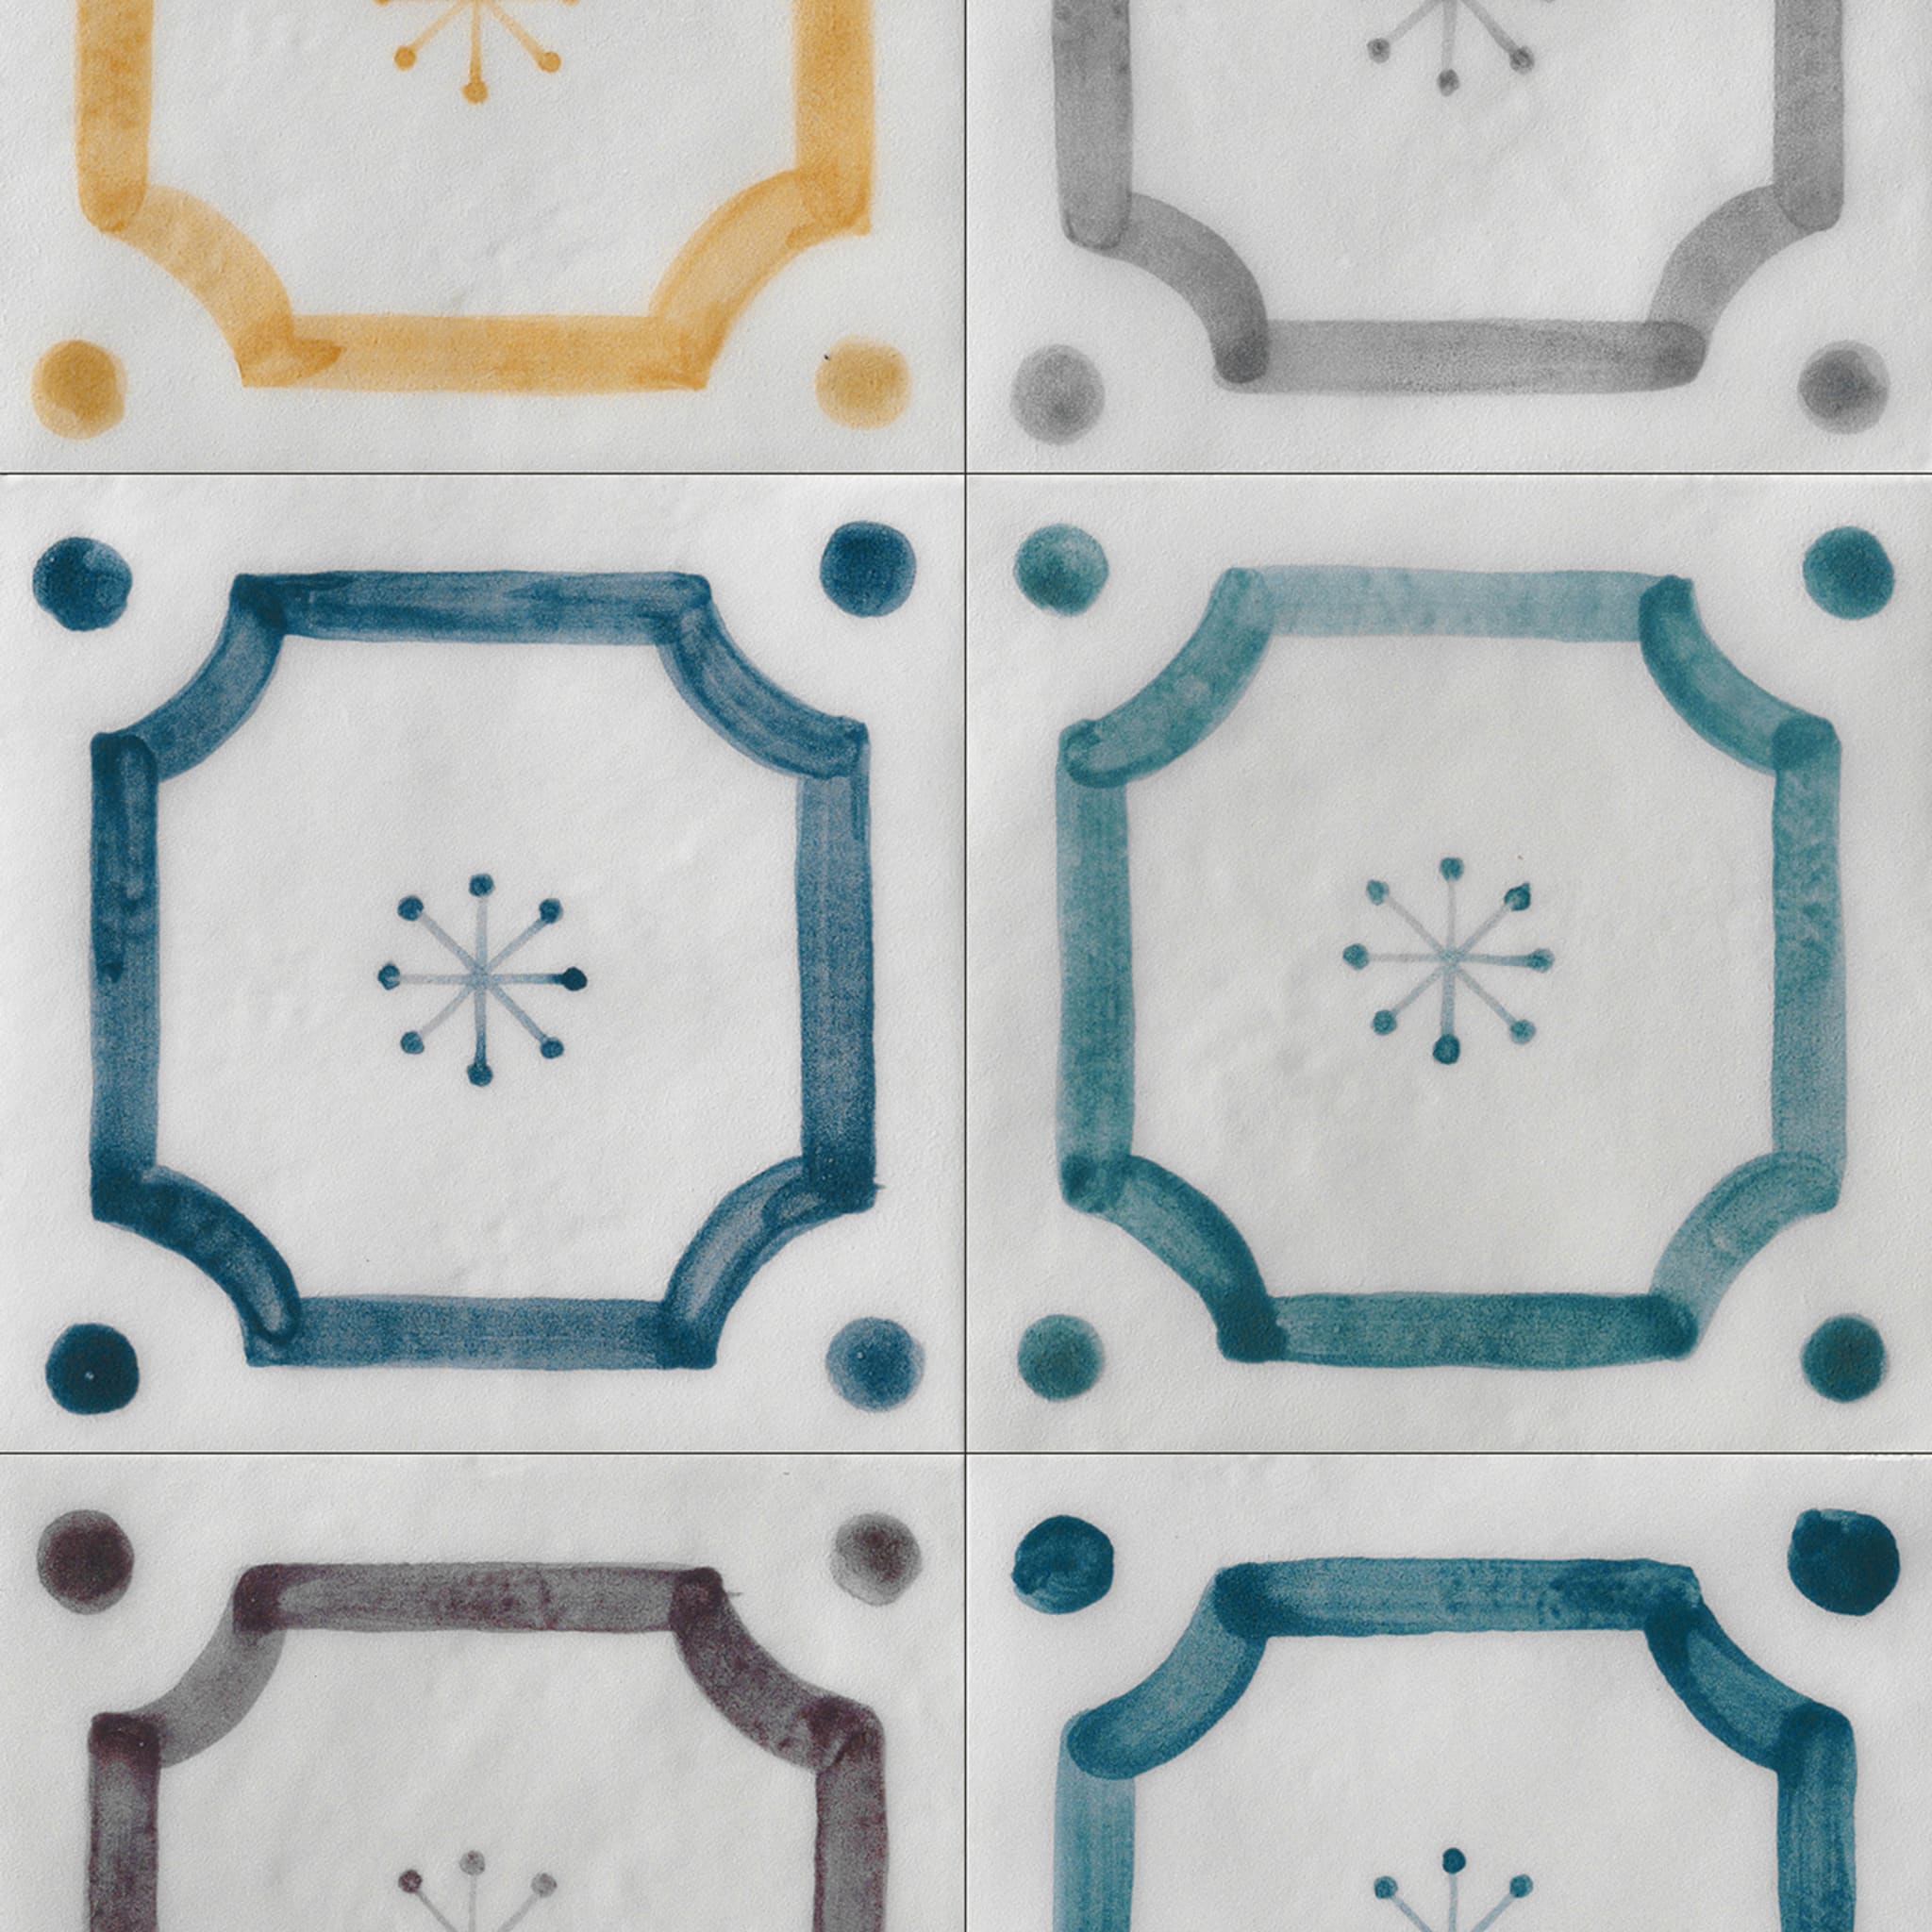 Ot Budoni Mint Set of 24 Square Tiles - Alternative view 1